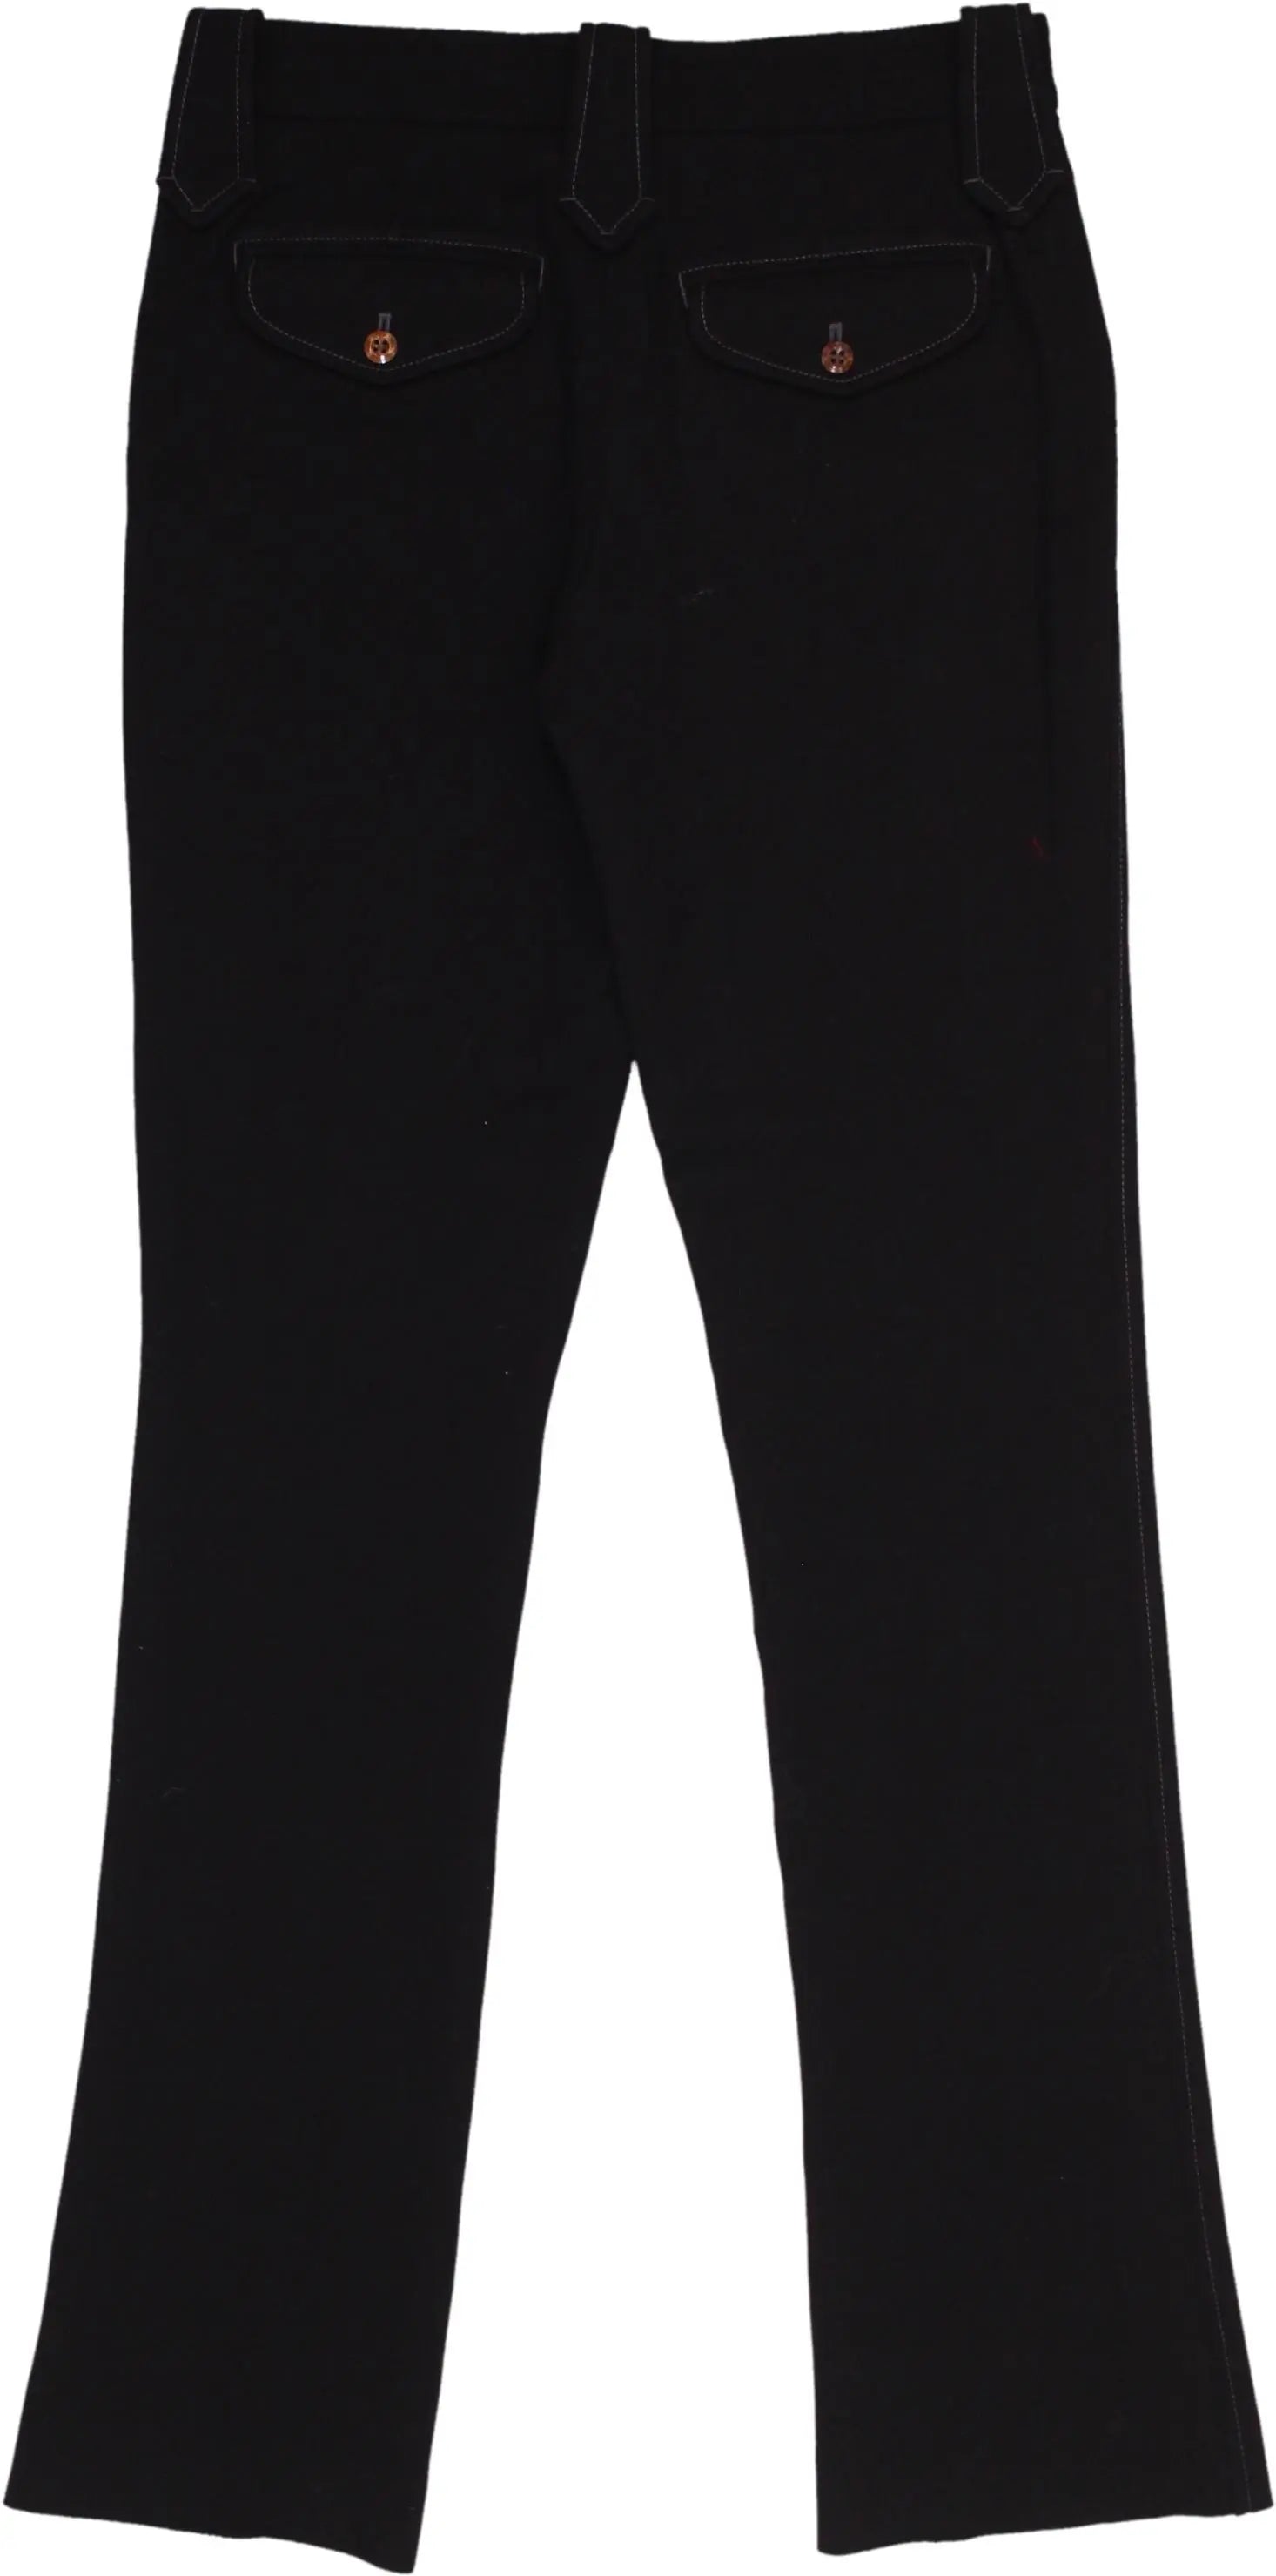 Ralph Lauren - Wool Black Pants by Ralph Lauren- ThriftTale.com - Vintage and second handclothing